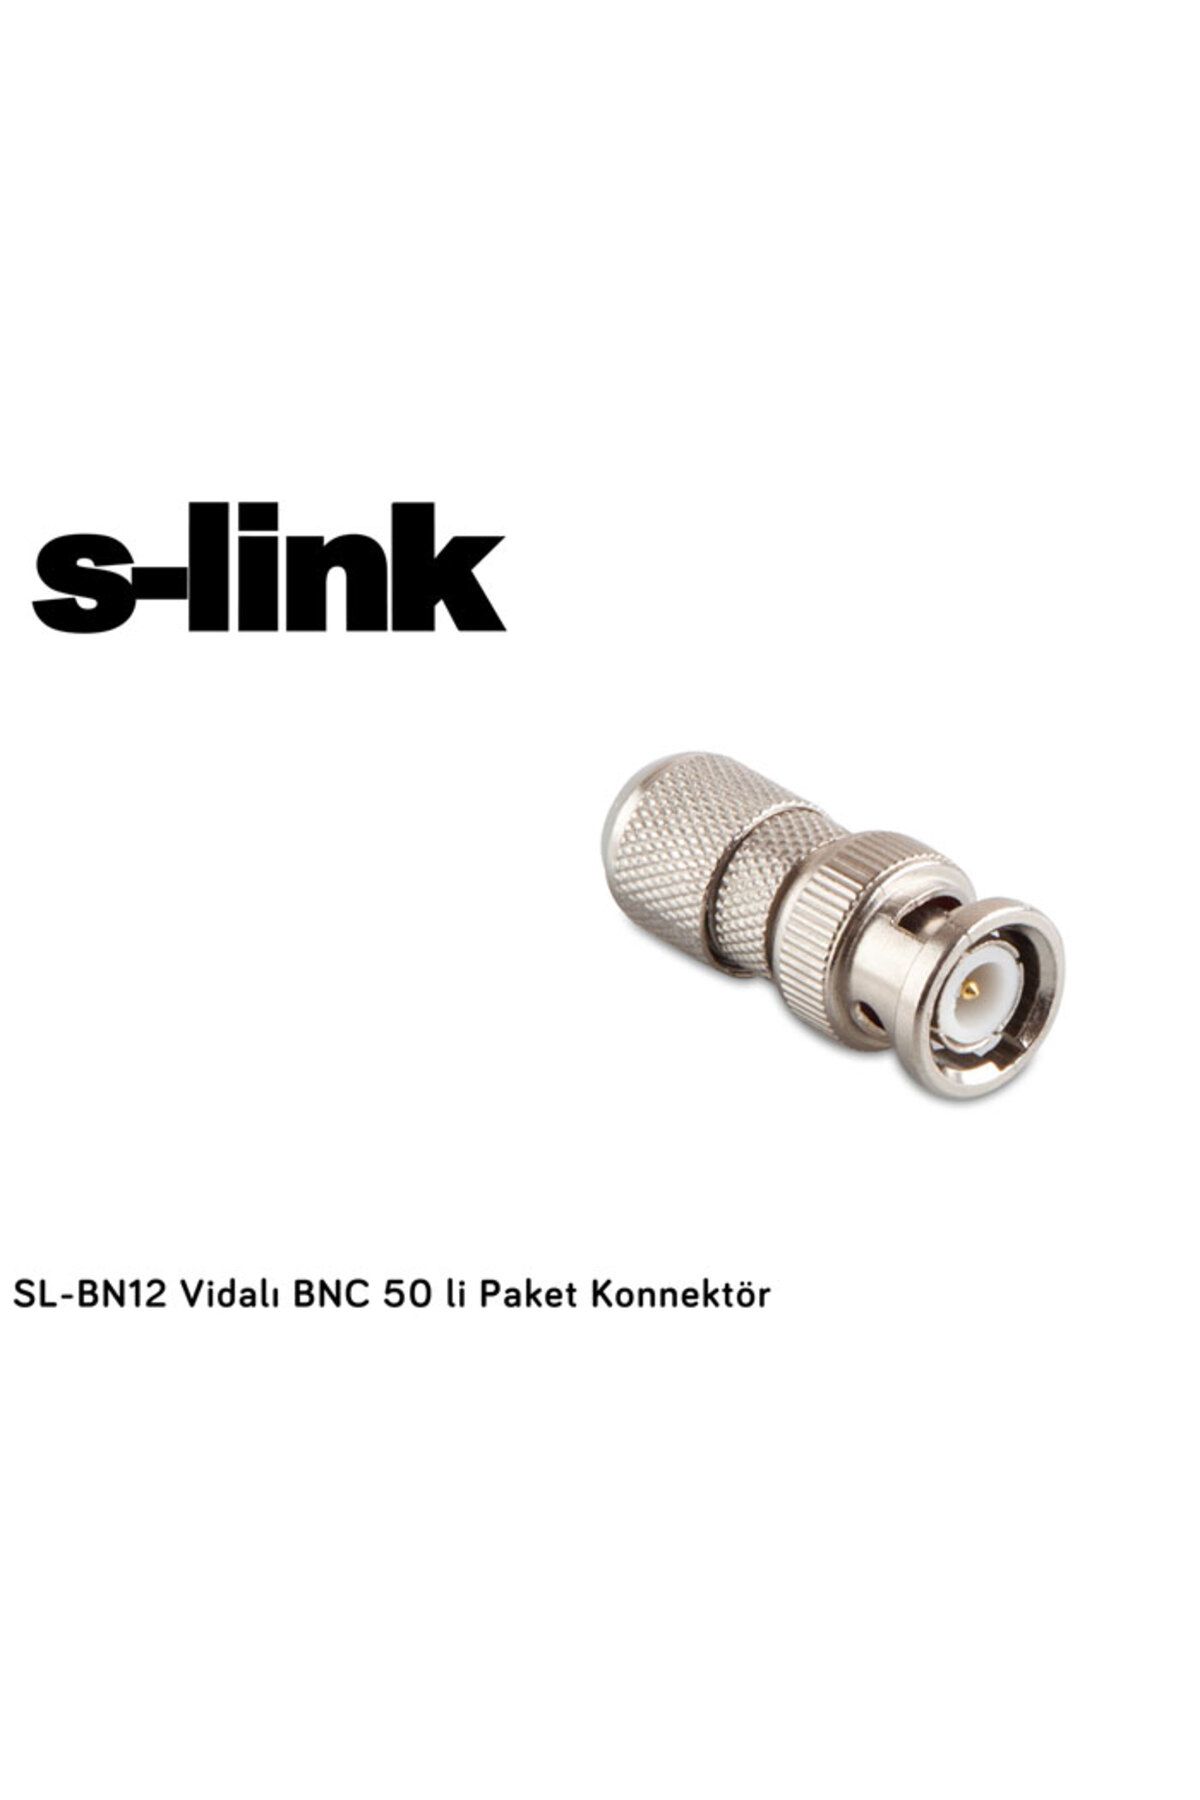 S-Link SL-BN12 Vidalı BNC 50 li Paket Konnektör